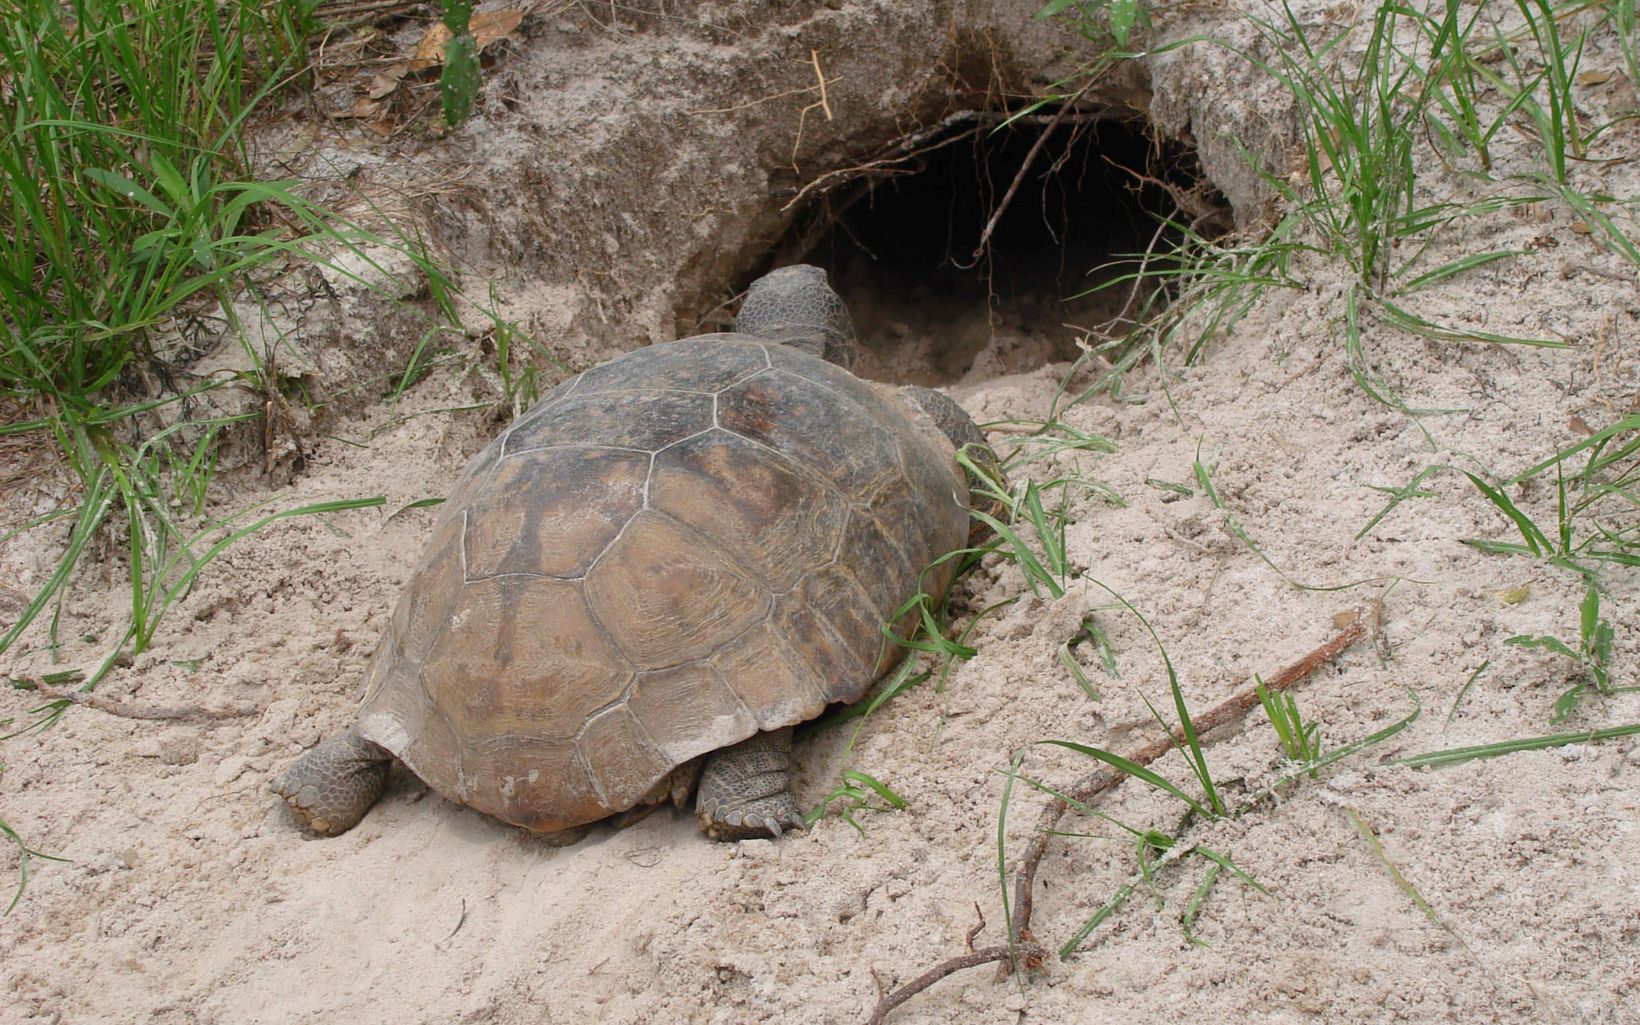 Gopher tortoise crawling into a burrow in the longleaf pine habitat. 